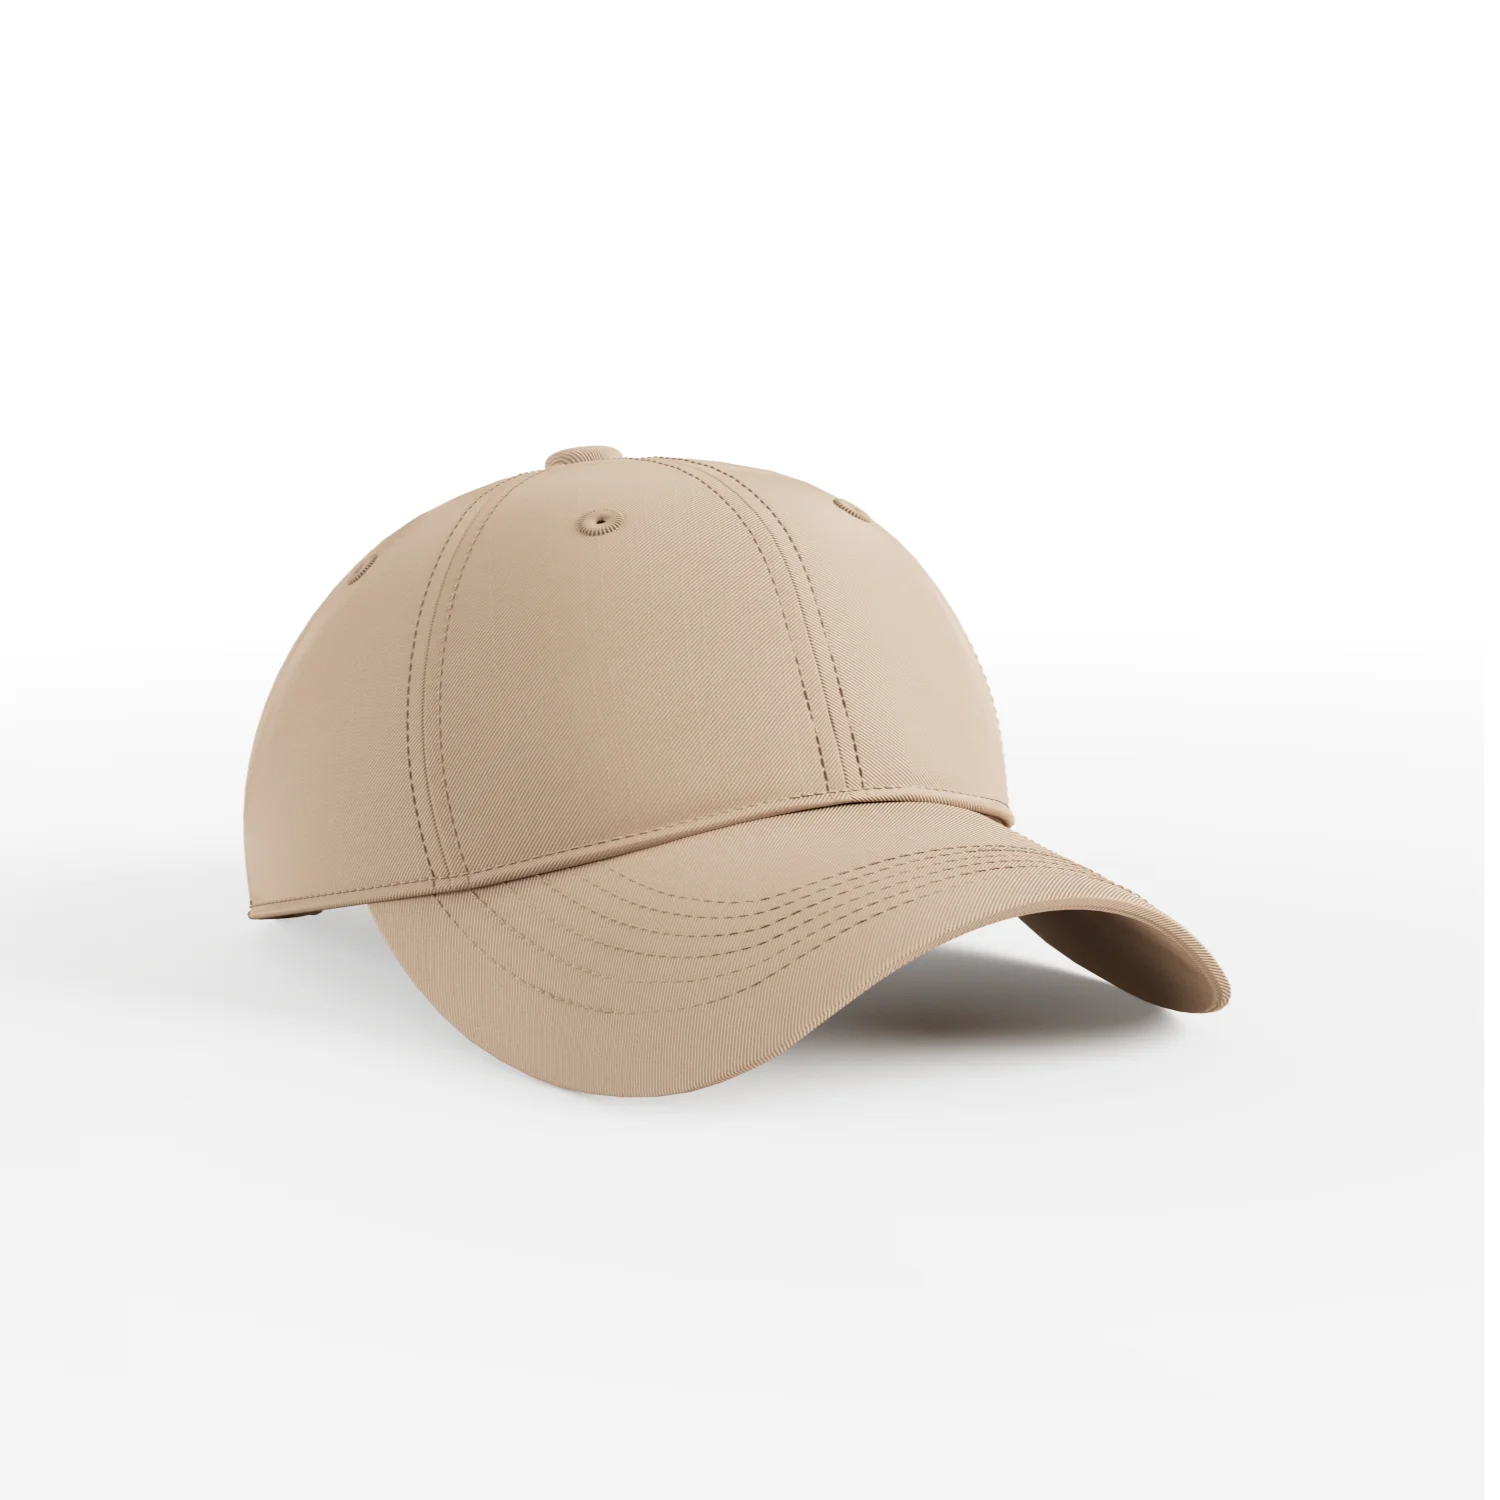 5 Pack Unisex Sublimation Mesh Baseball Hat Adjustable Plain Blank